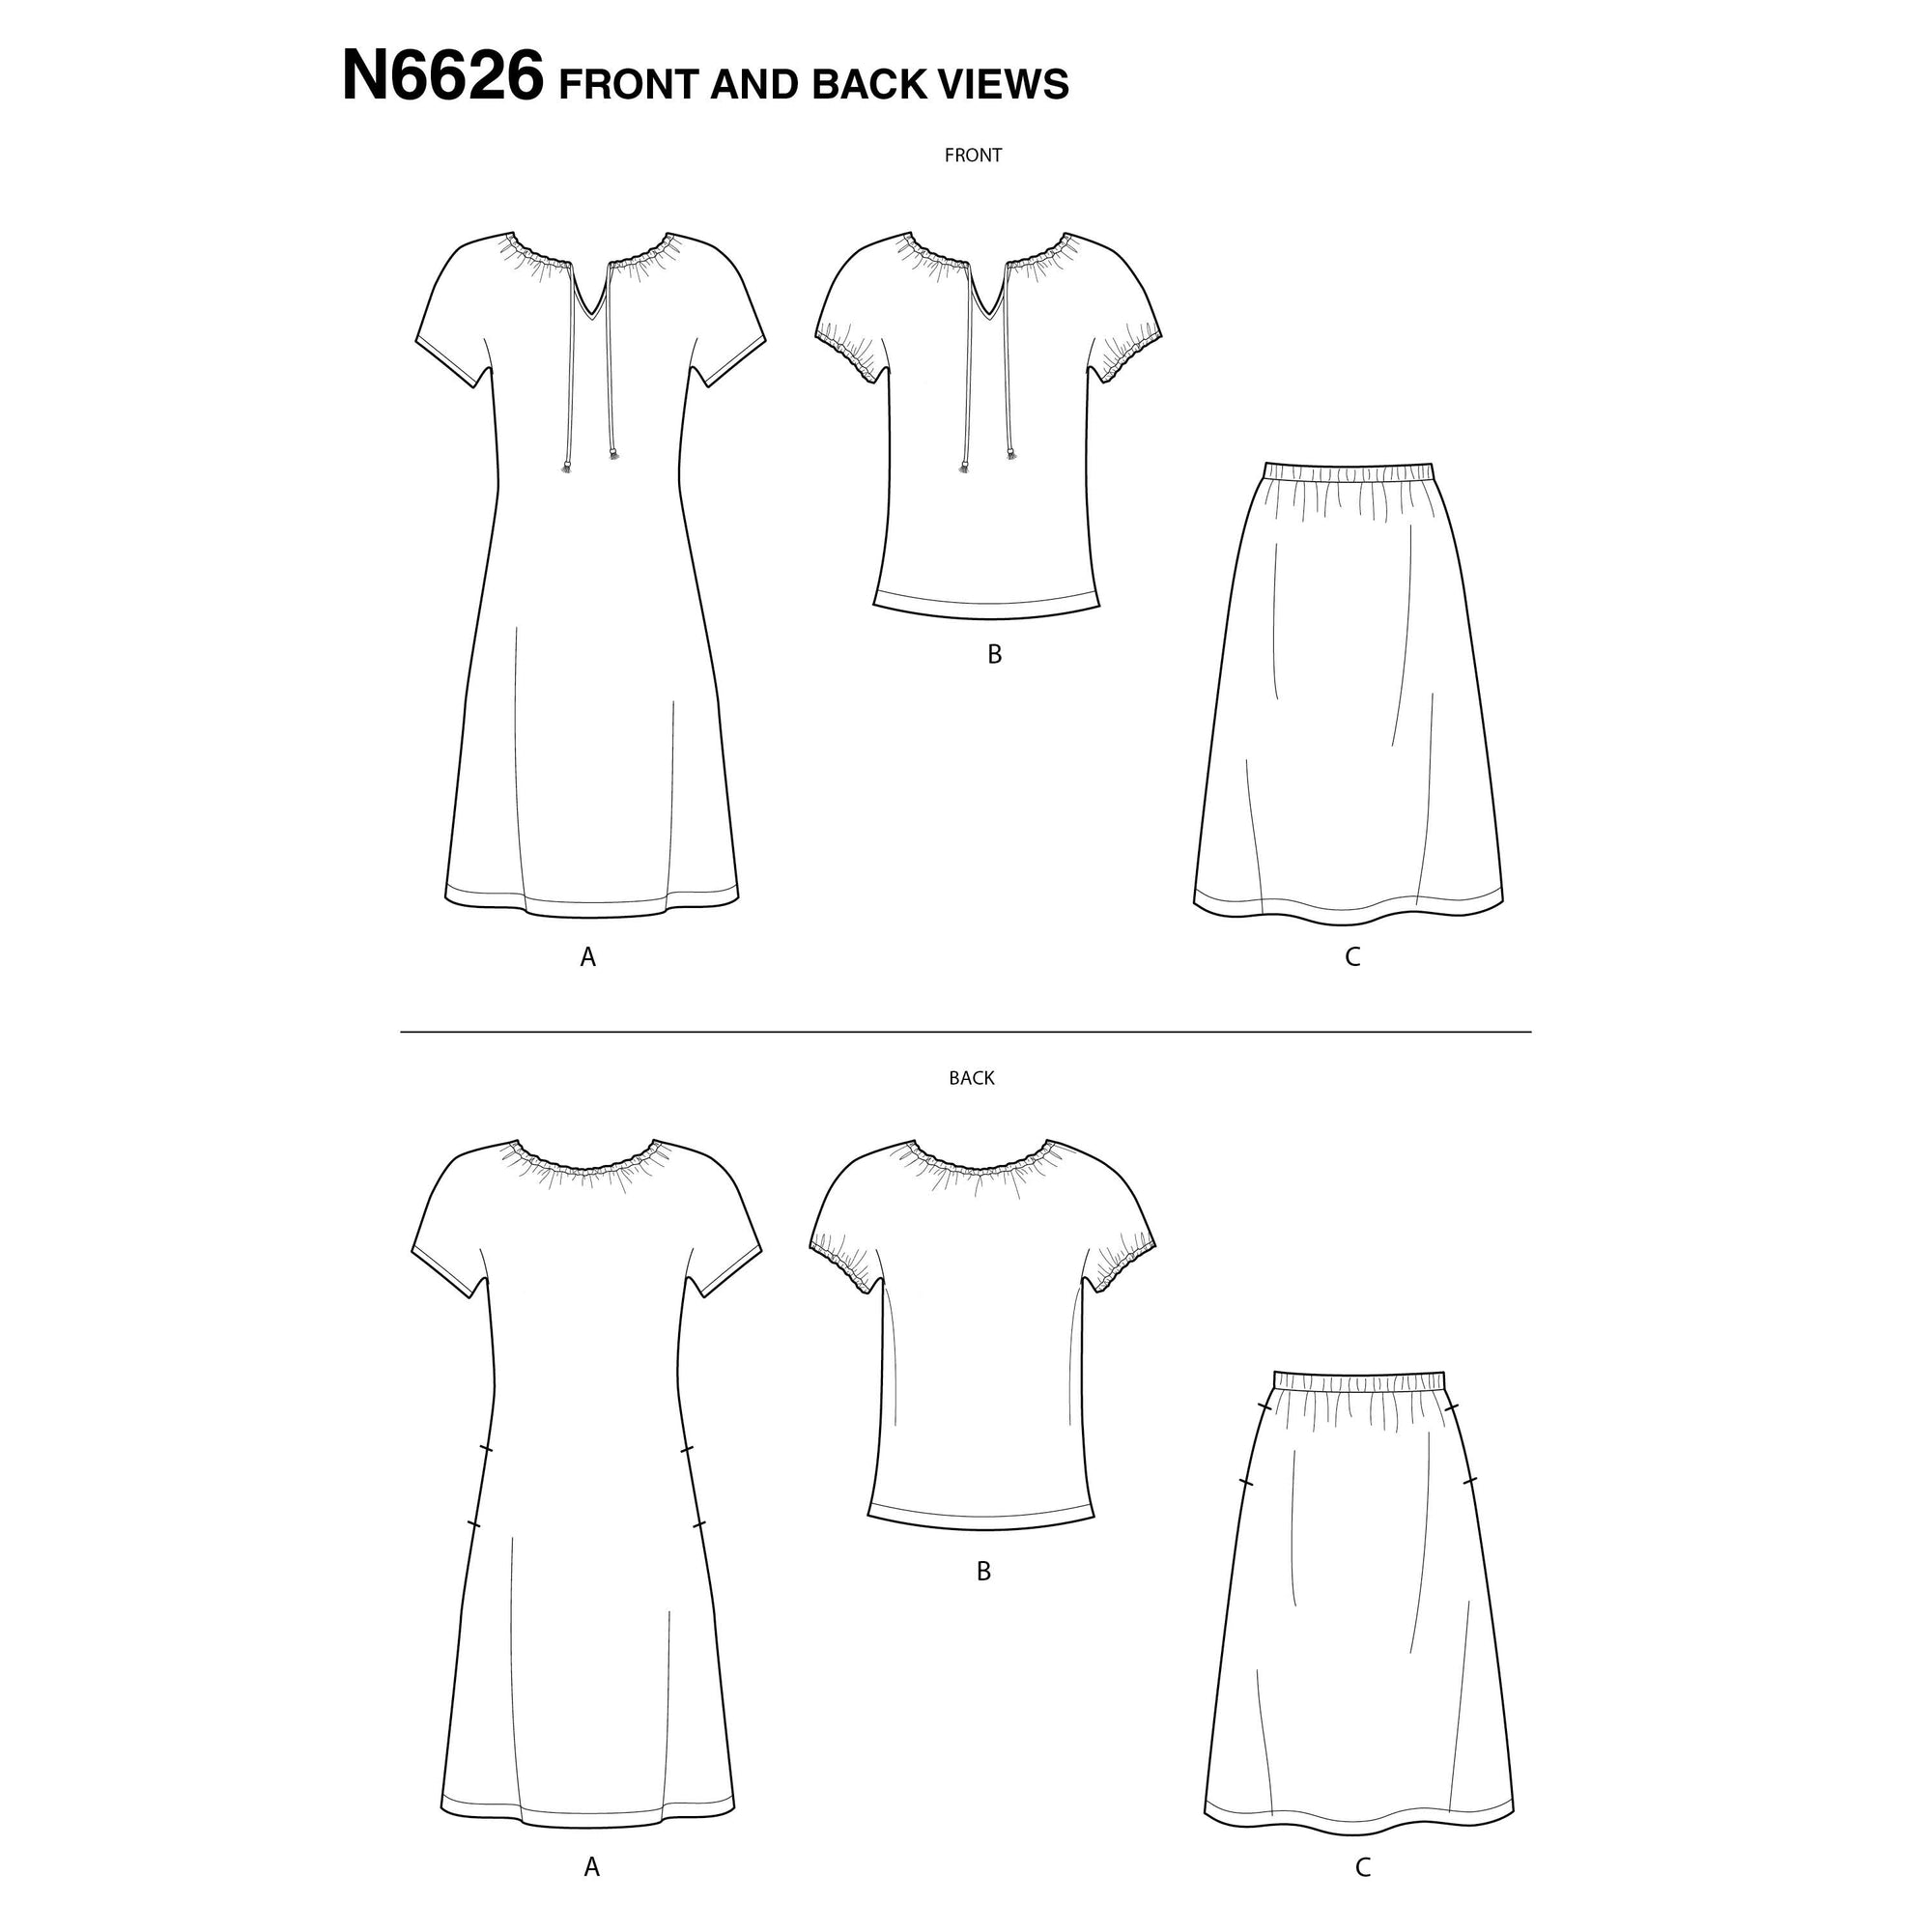 6626 New Look Sewing Pattern N6626 Misses' Sportswear